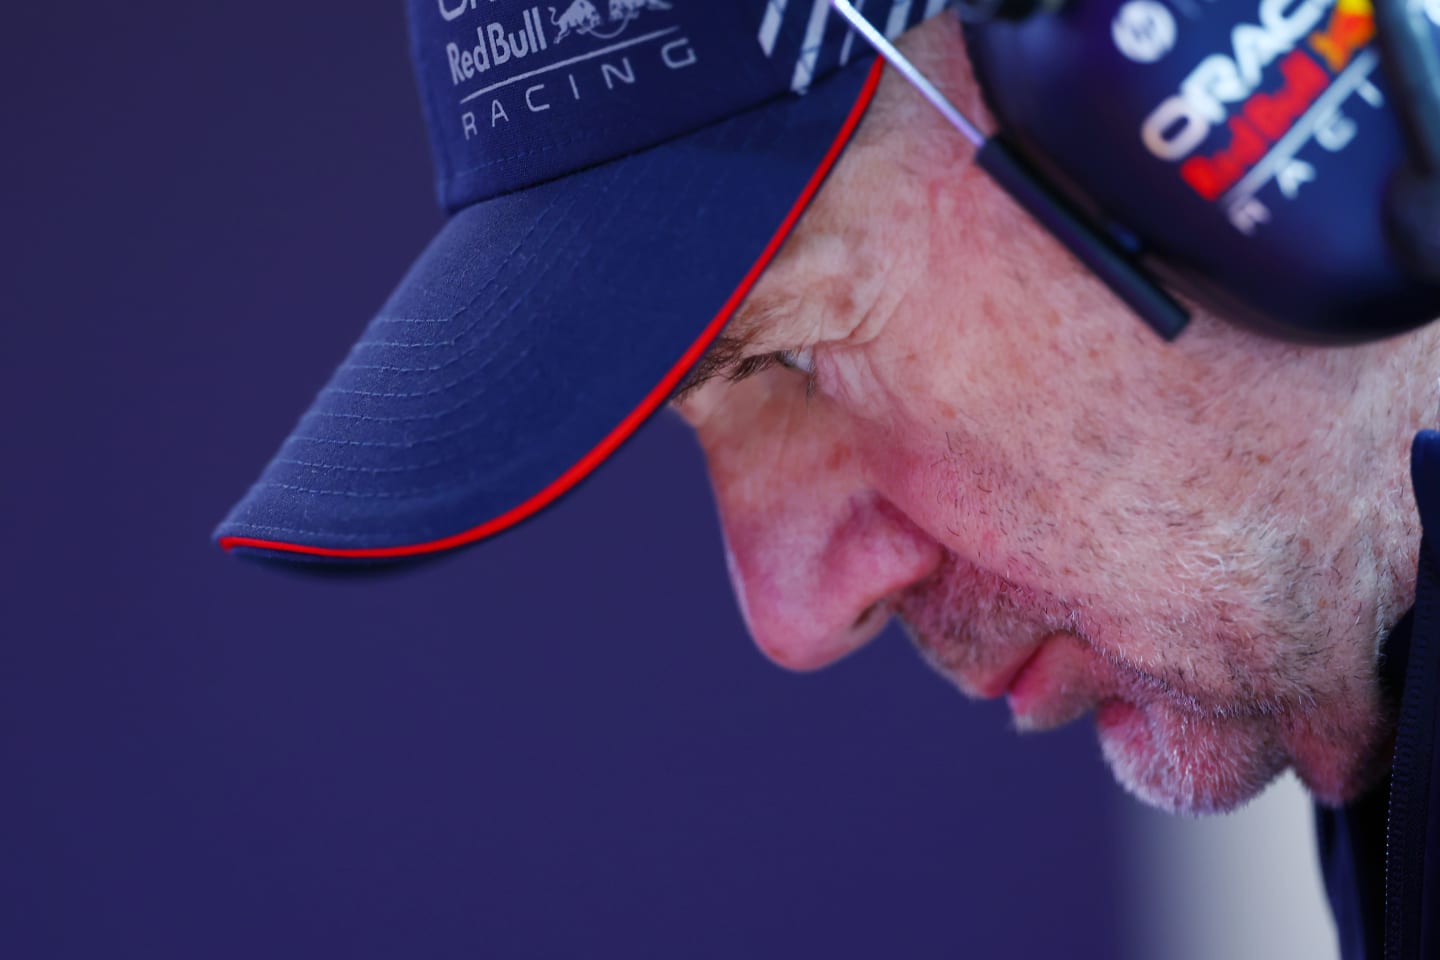 LAS VEGAS, NEVADA - NOVEMBER 16: Adrian Newey, the Chief Technical Officer of Red Bull Racing looks